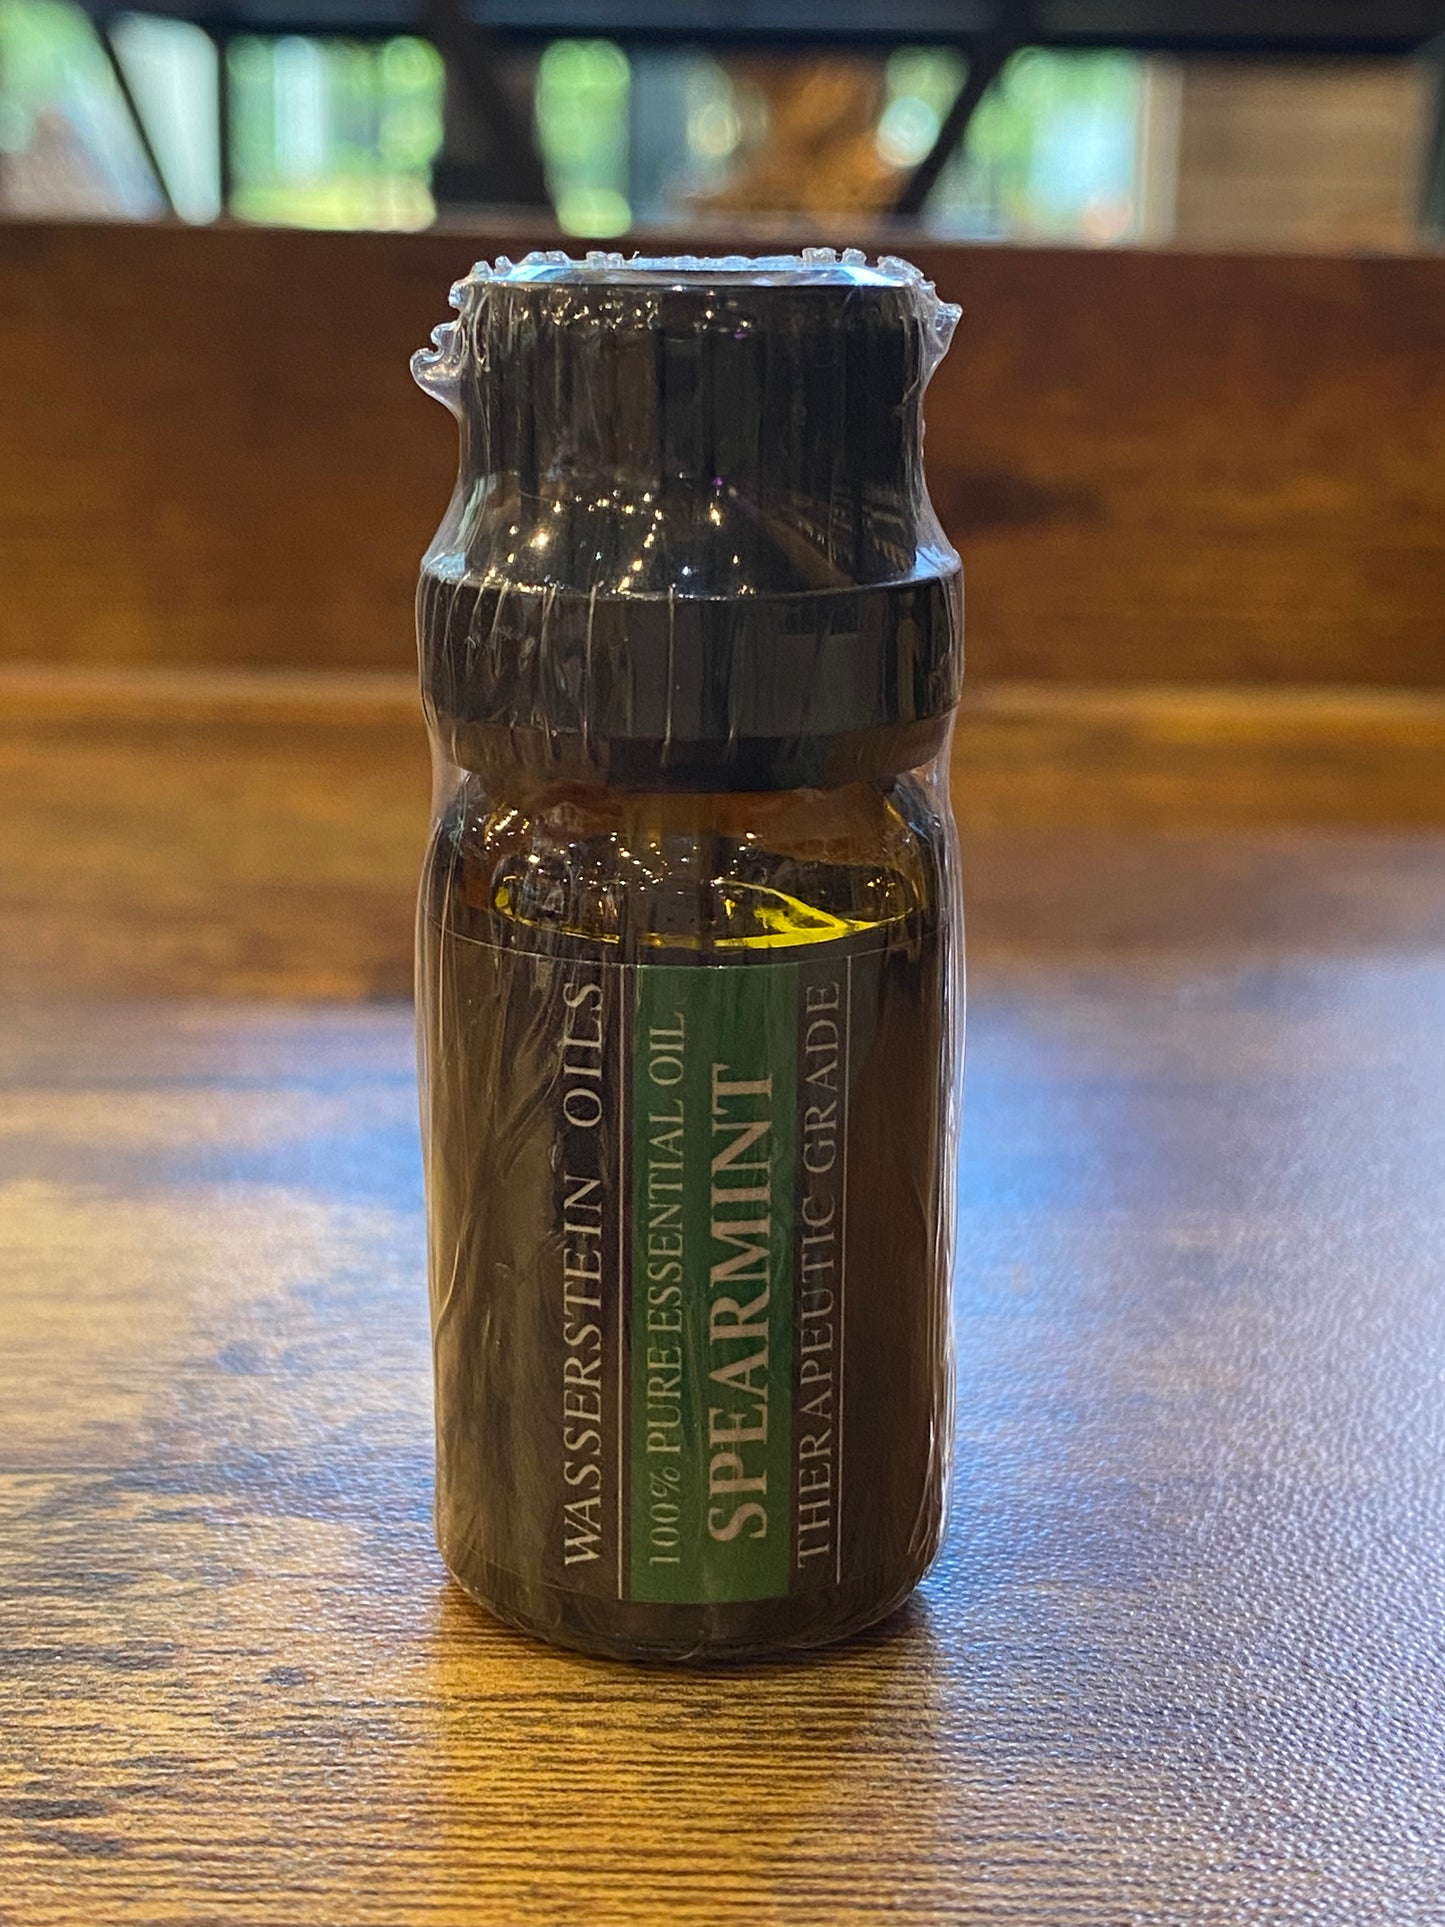 Wasserstein Essential Oils Therapeutic Grade Spearmint